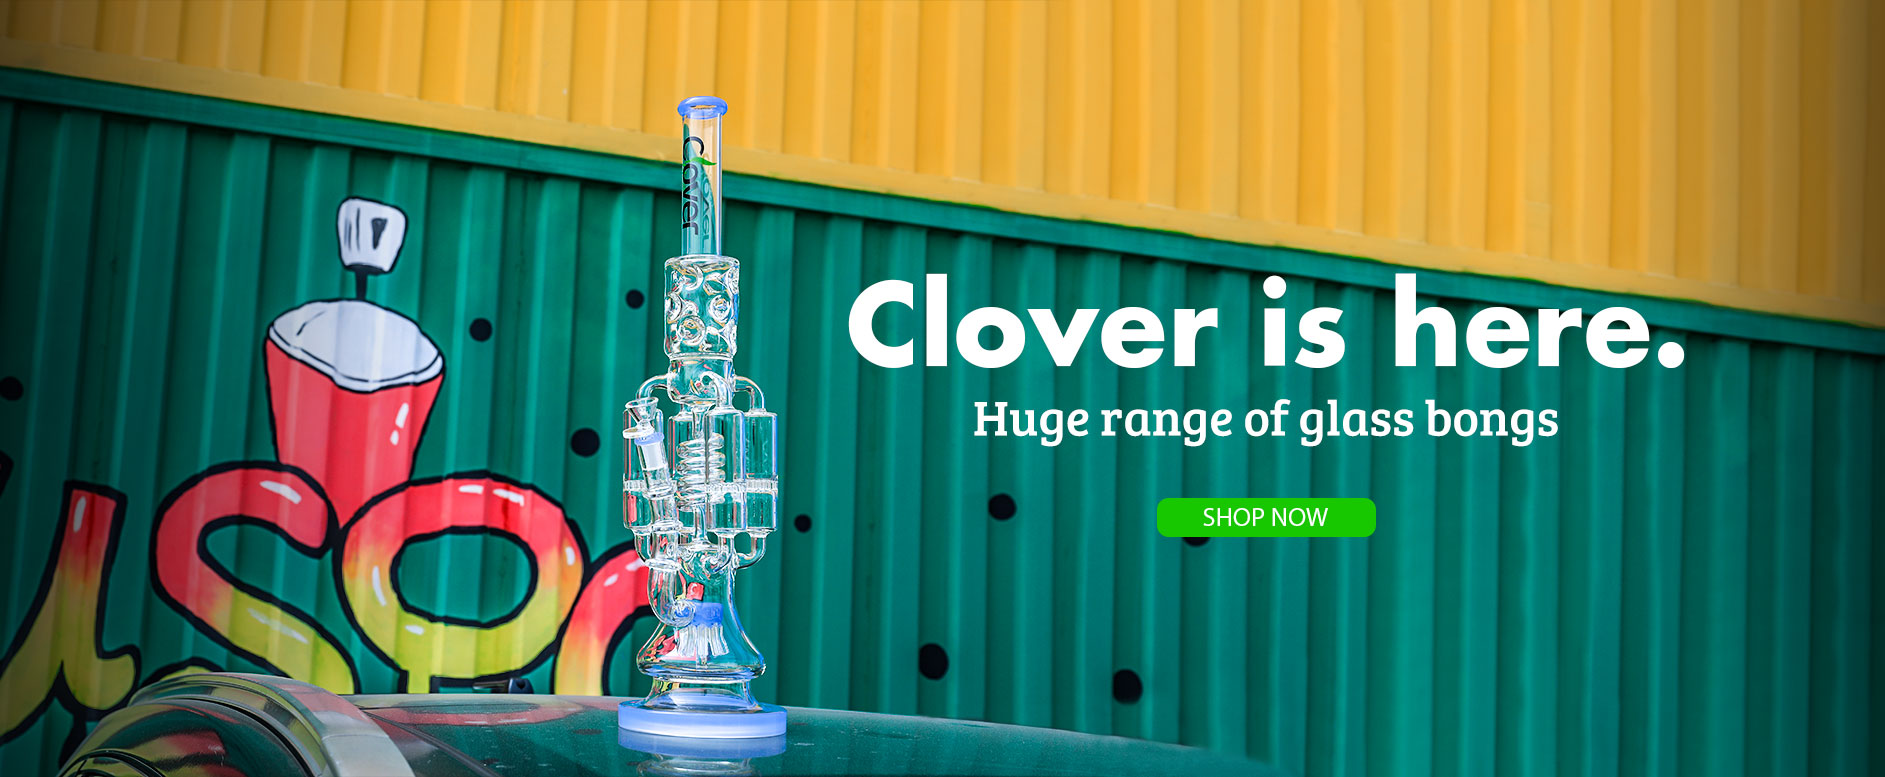 Summer season for Cloverglass